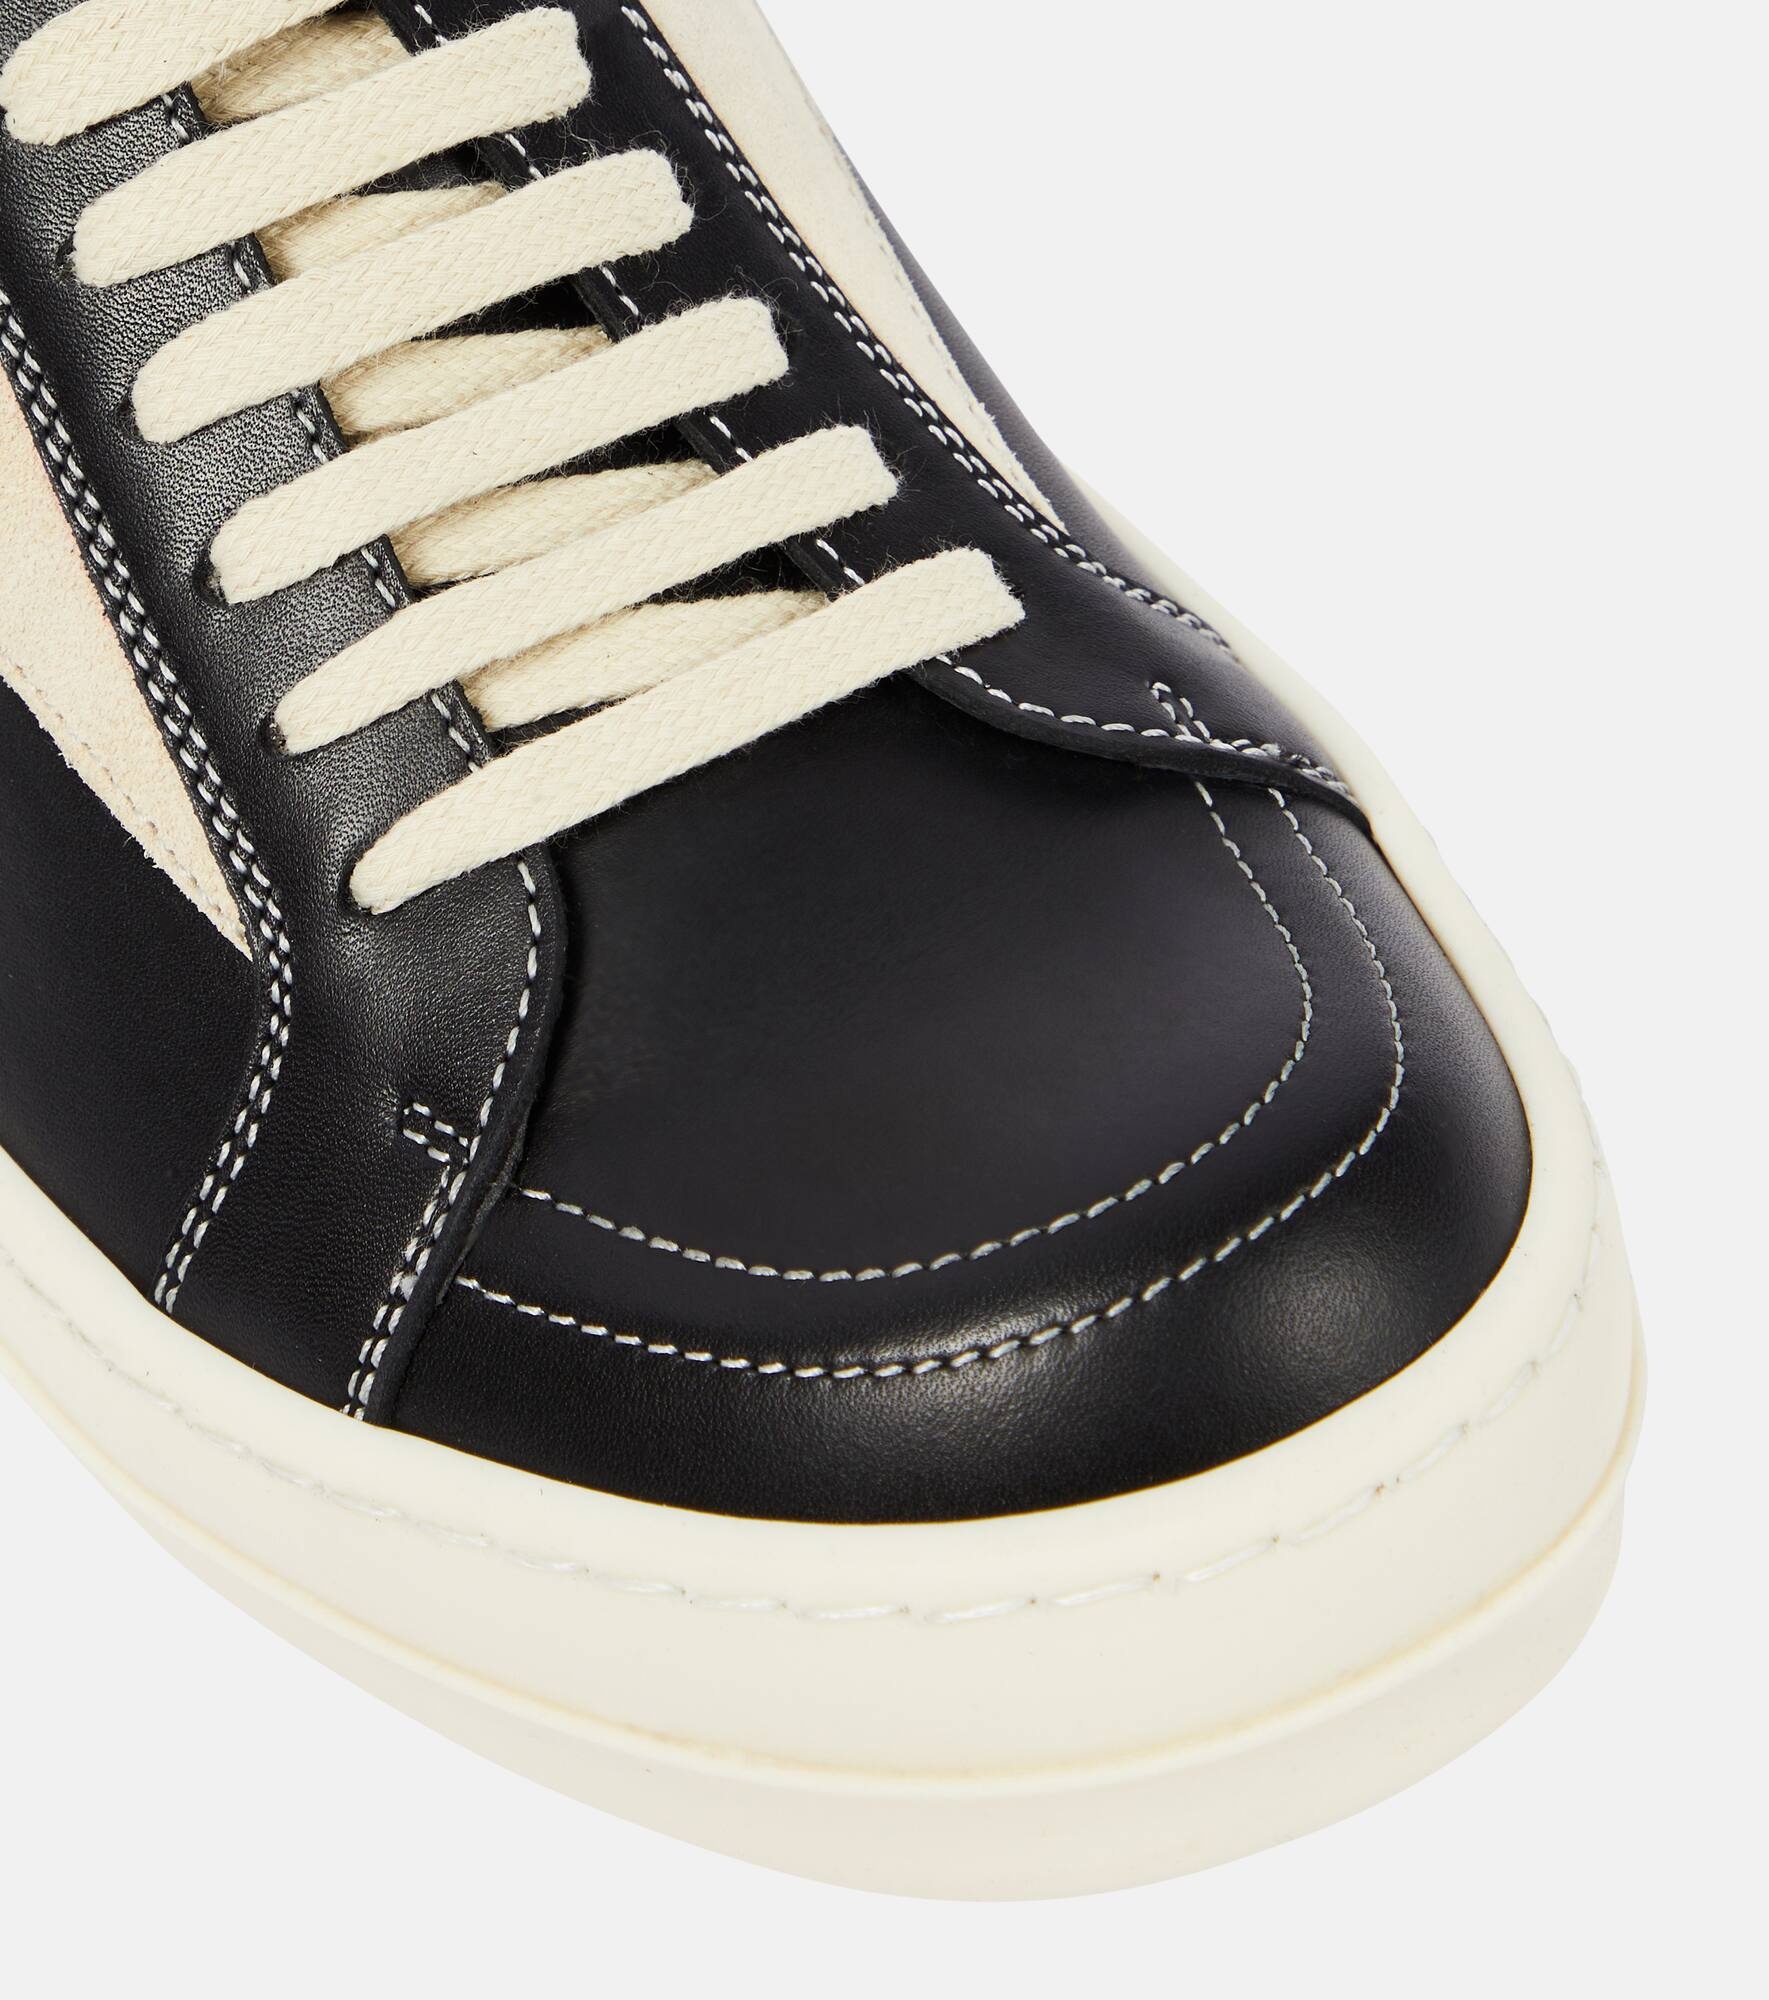 Vintage leather sneakers - 6